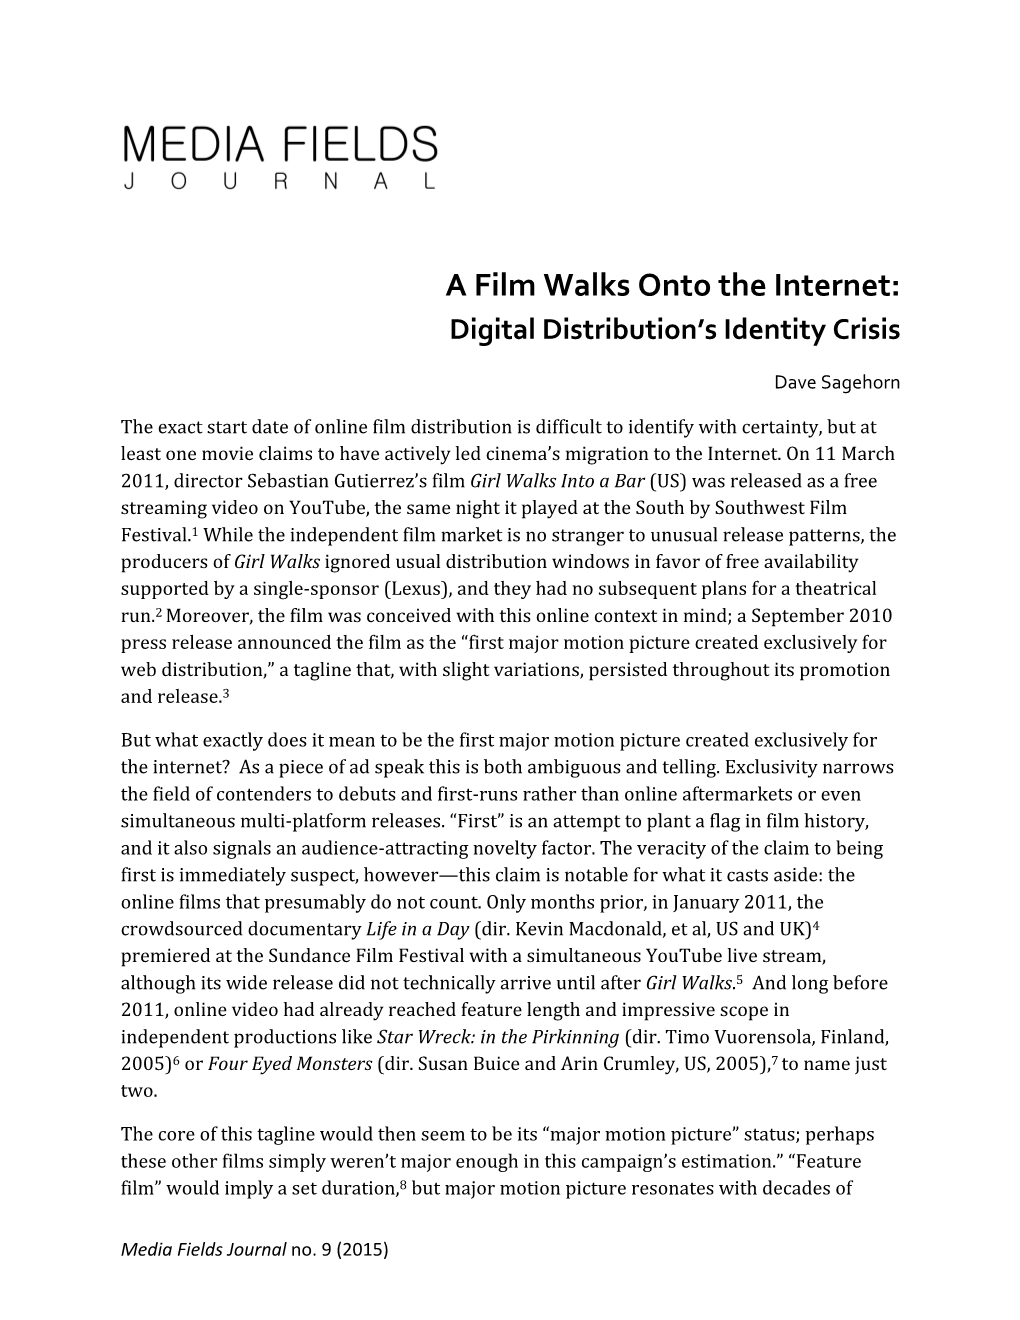 A Film Walks Onto the Internet: Digital Distribution’S Identity Crisis